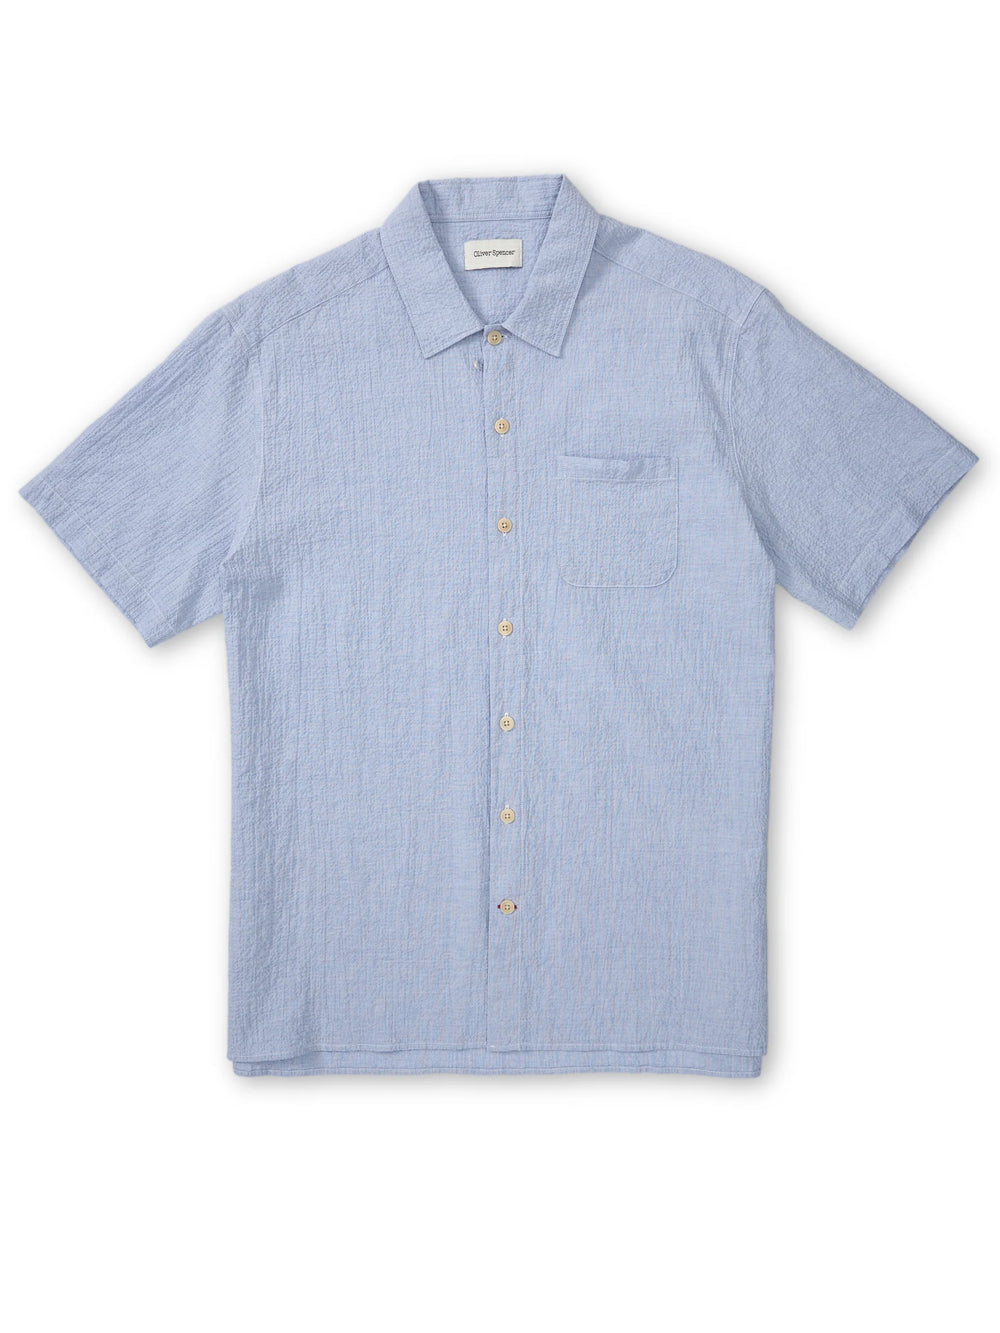 Riviera S/S Shirt - Hughes Blue